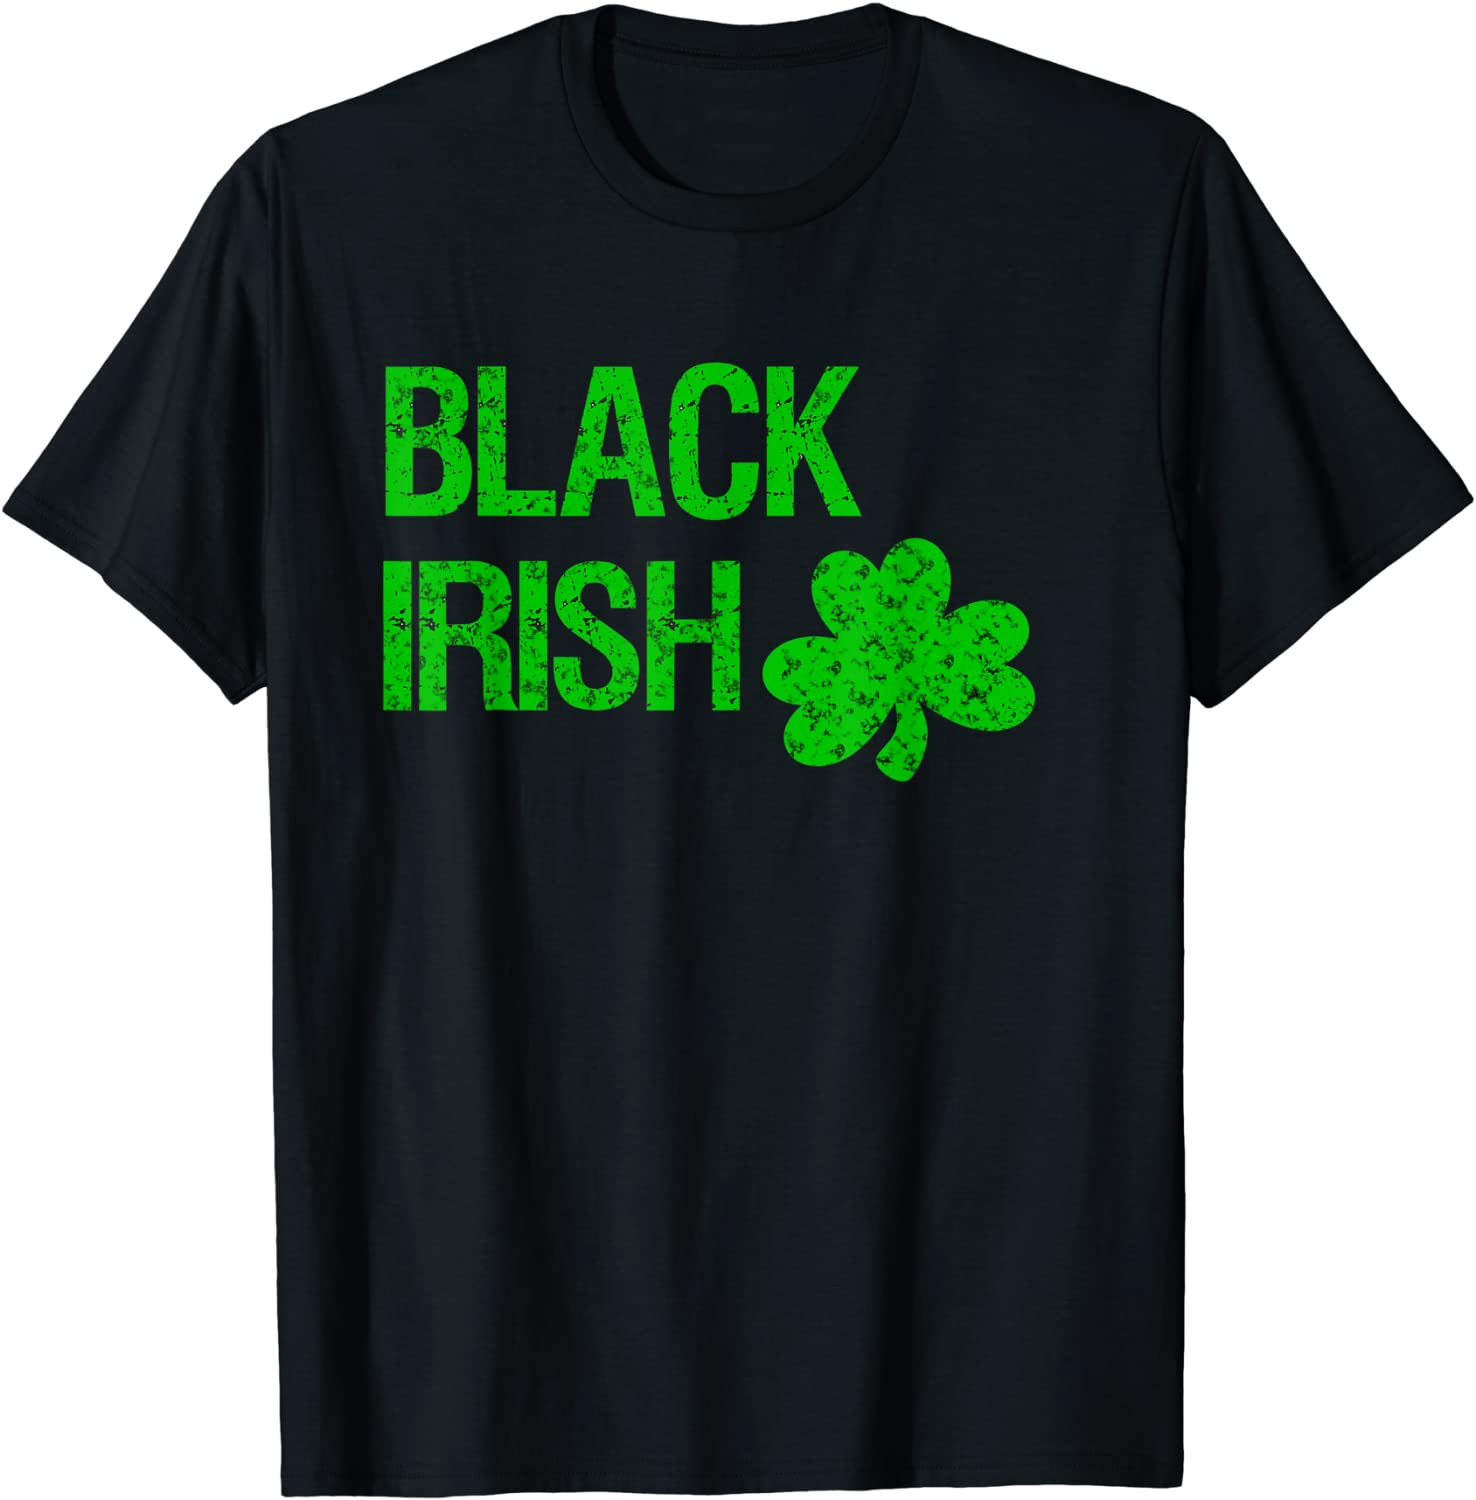 Black Irish St. Patrick's Day  T-Shirt